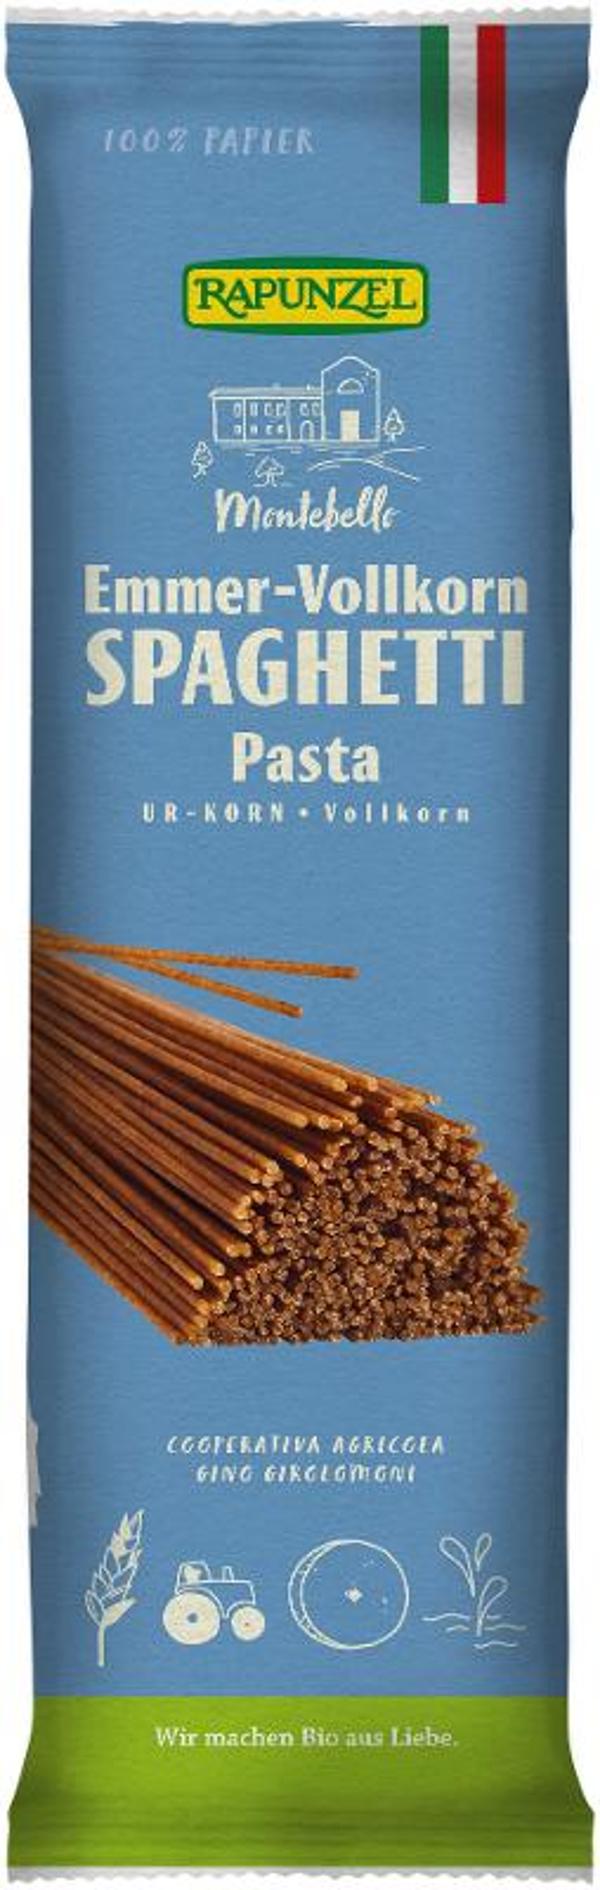 Produktfoto zu Emmer Spaghetti Vollkorn statt 3,79€